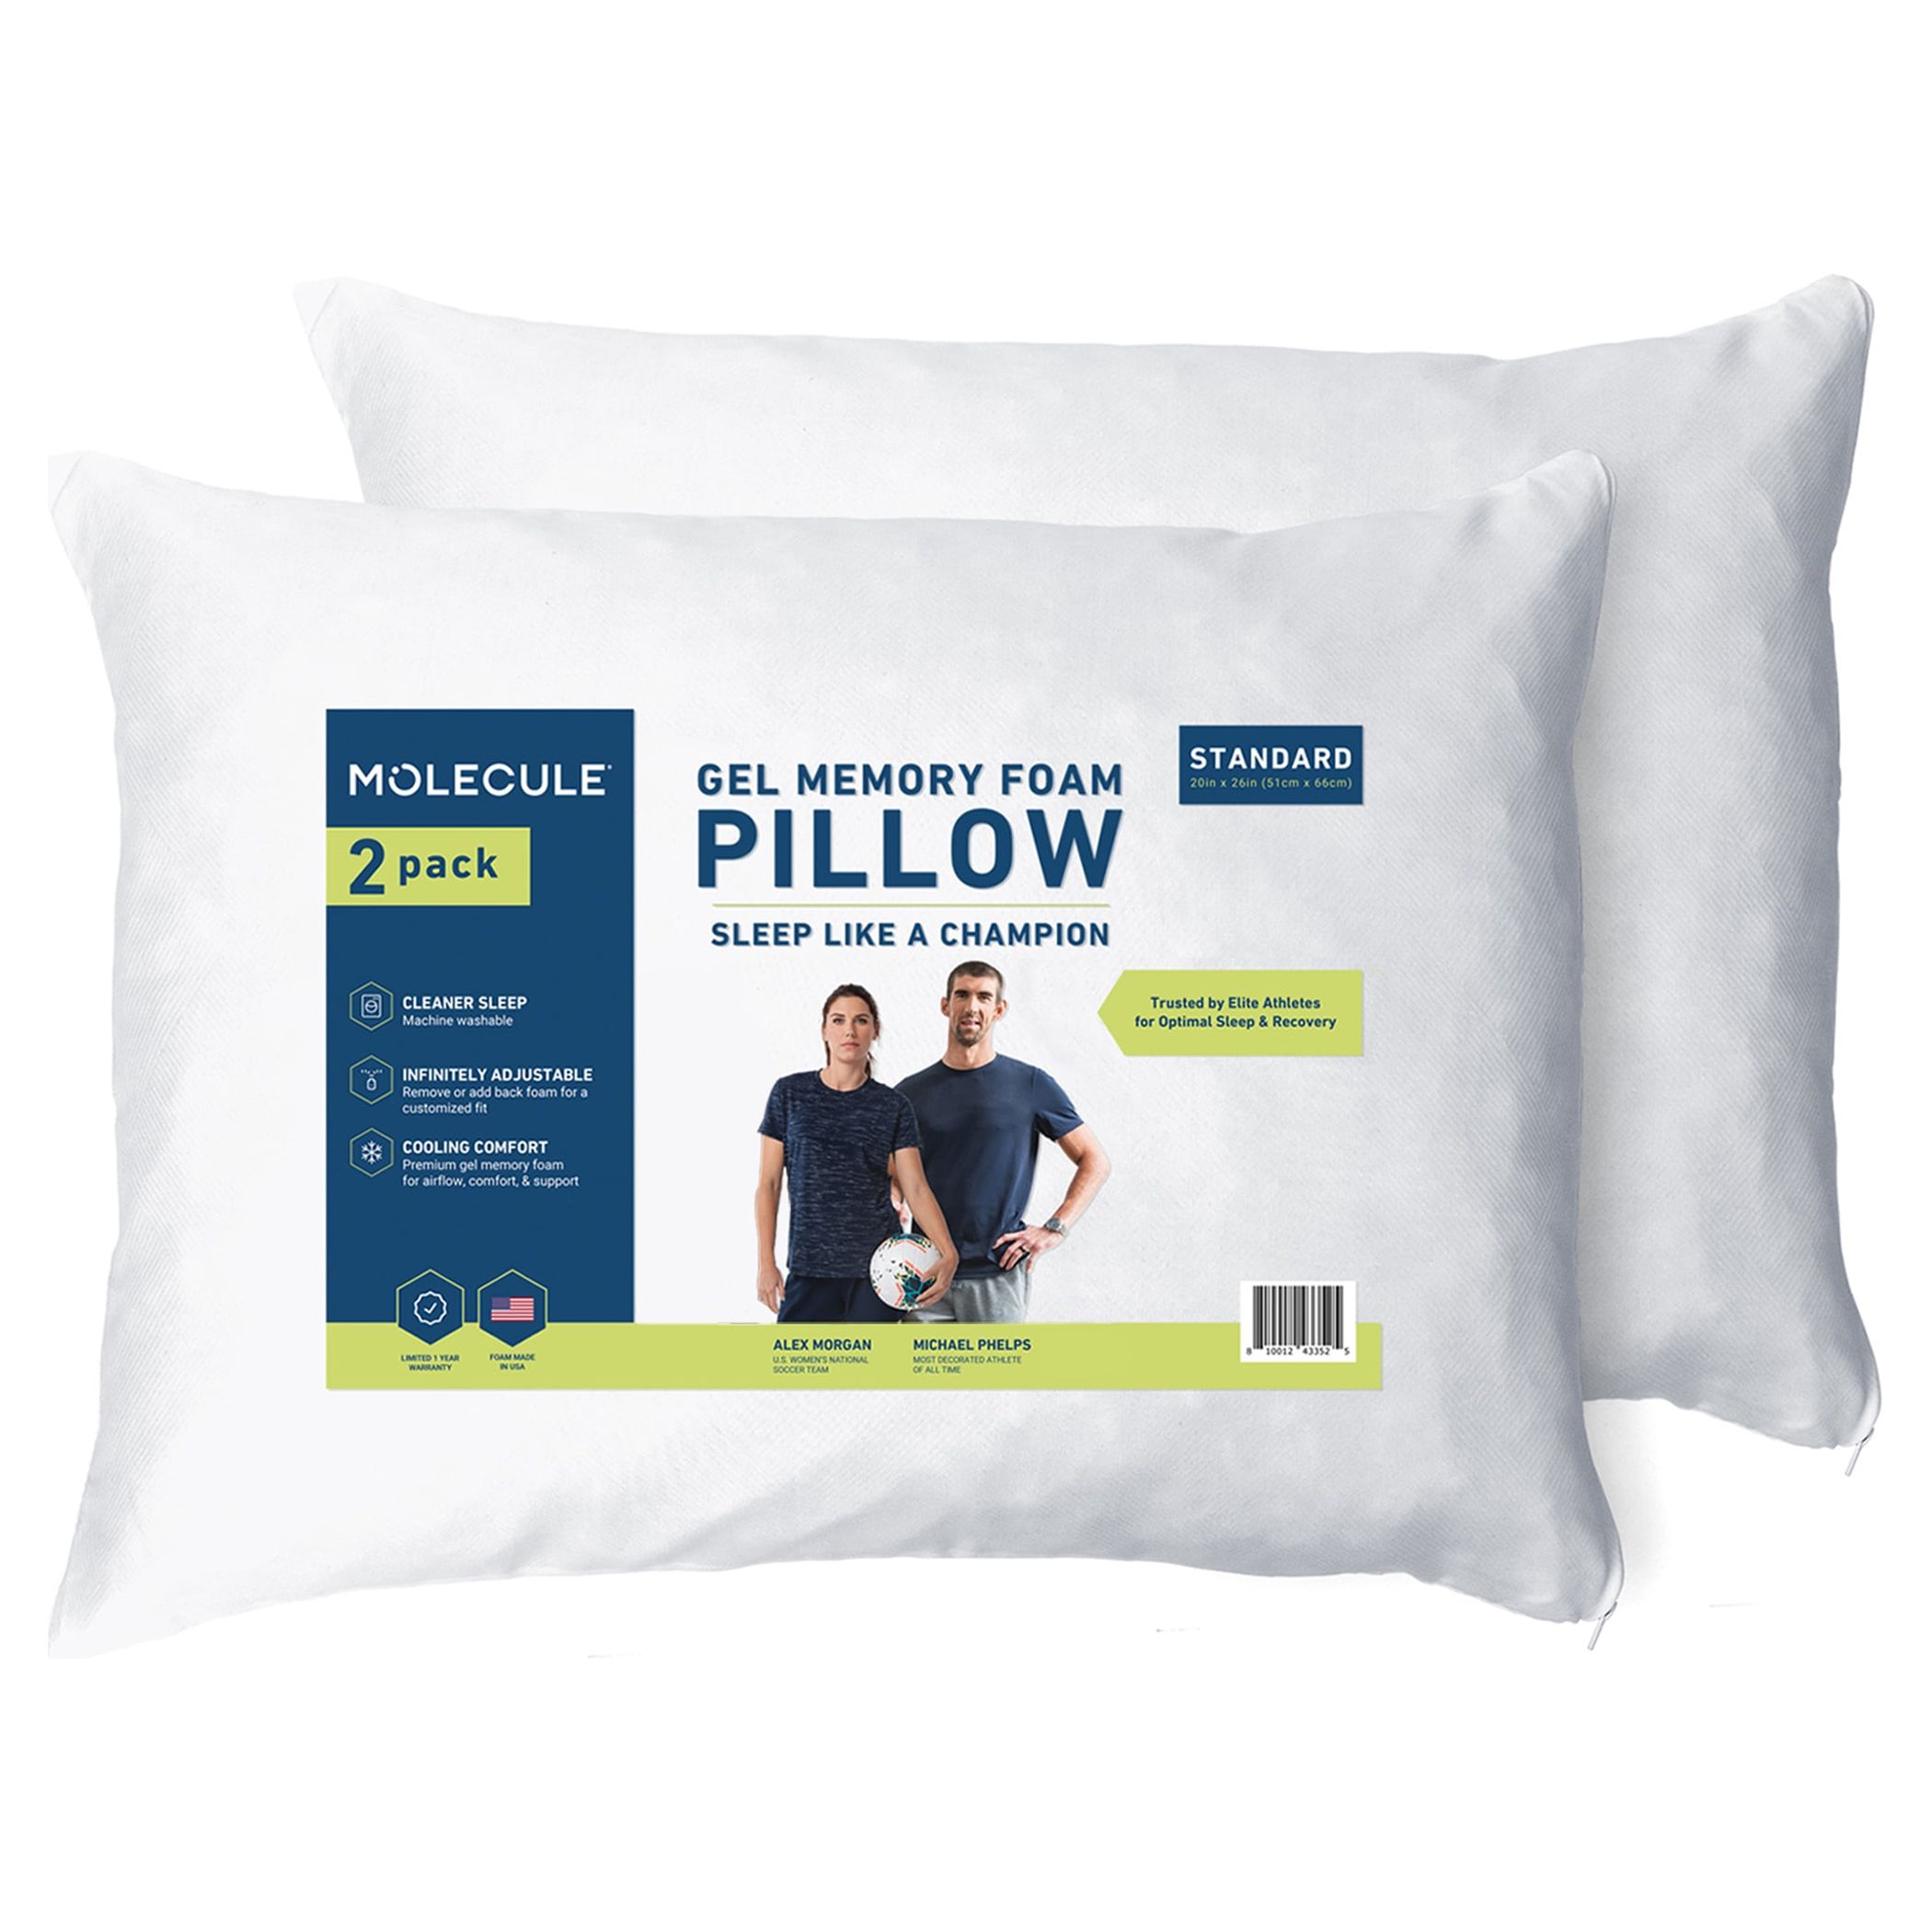 Molecule Gel Memory Foam Pillow, Standard/Queen, 2 Pack - image 1 of 7